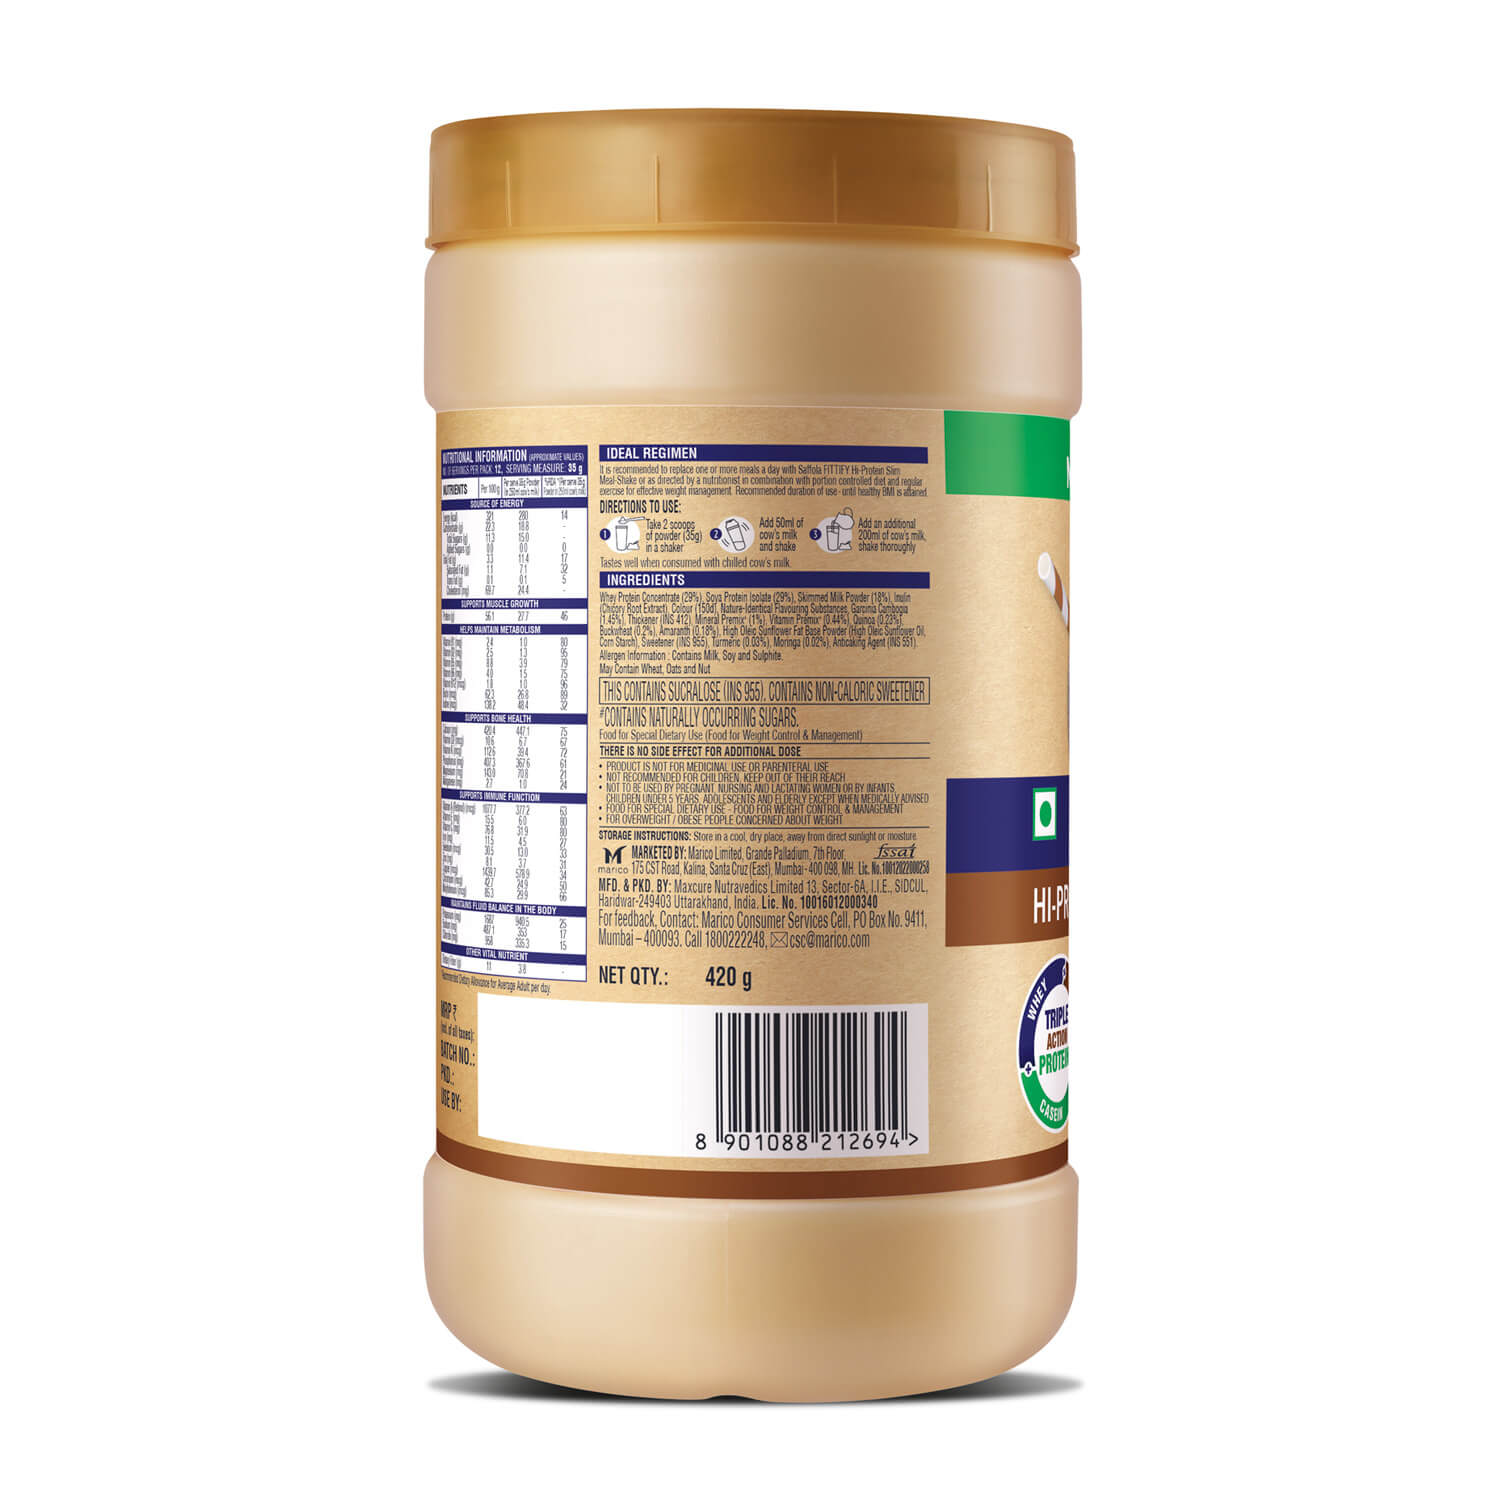 Saffola Fittify Hi-Protein Slim Meal Shake Cappuccino Coffee - 420g